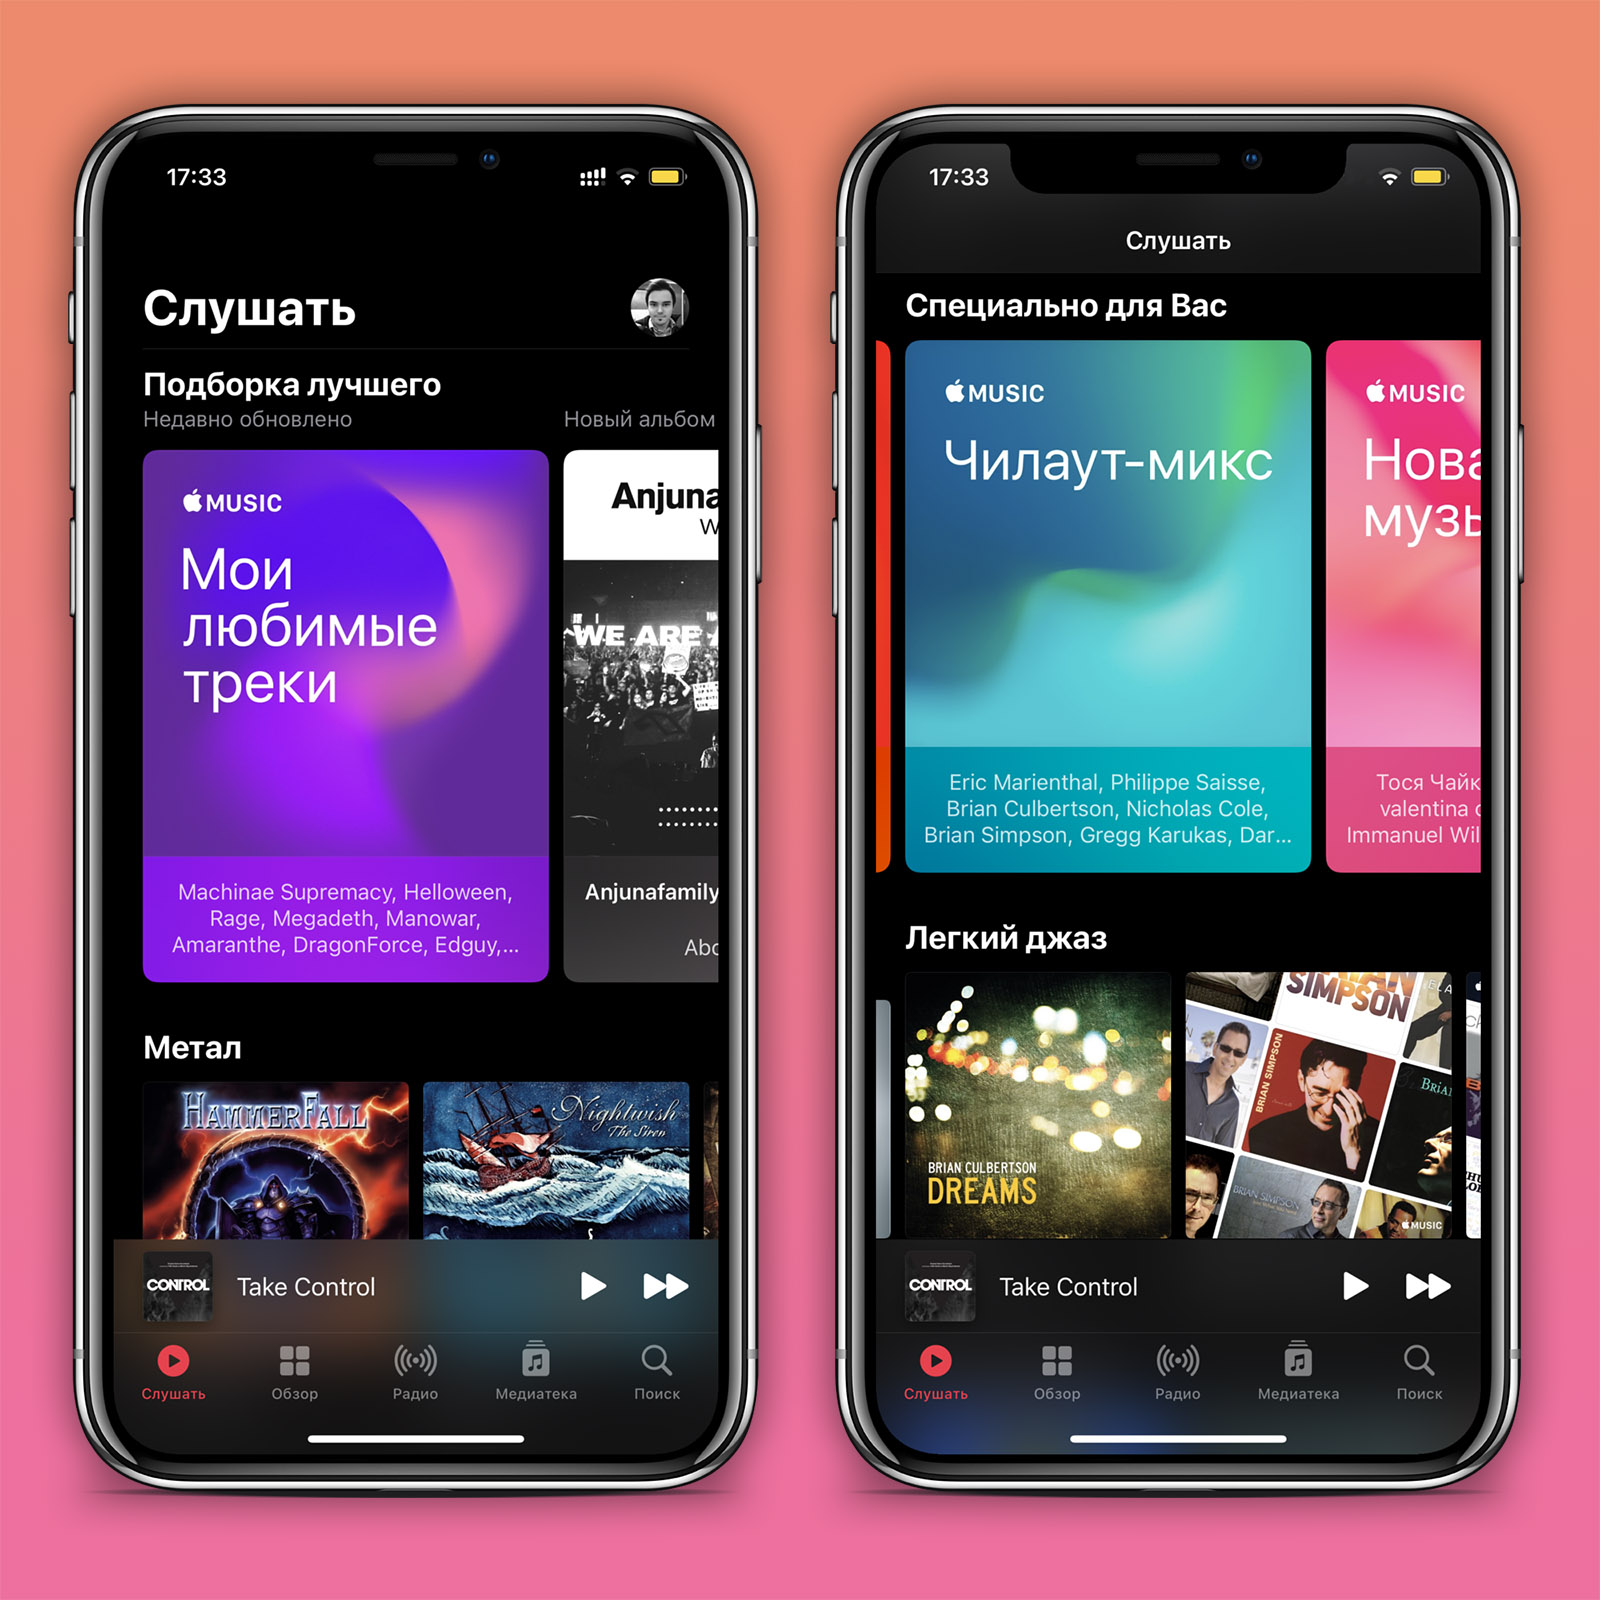 Музыка айфона 4. Эппл Мьюзик. Apple Music iphone. Как выглядит эпл Мьюзик. Apple Music IOS 14.